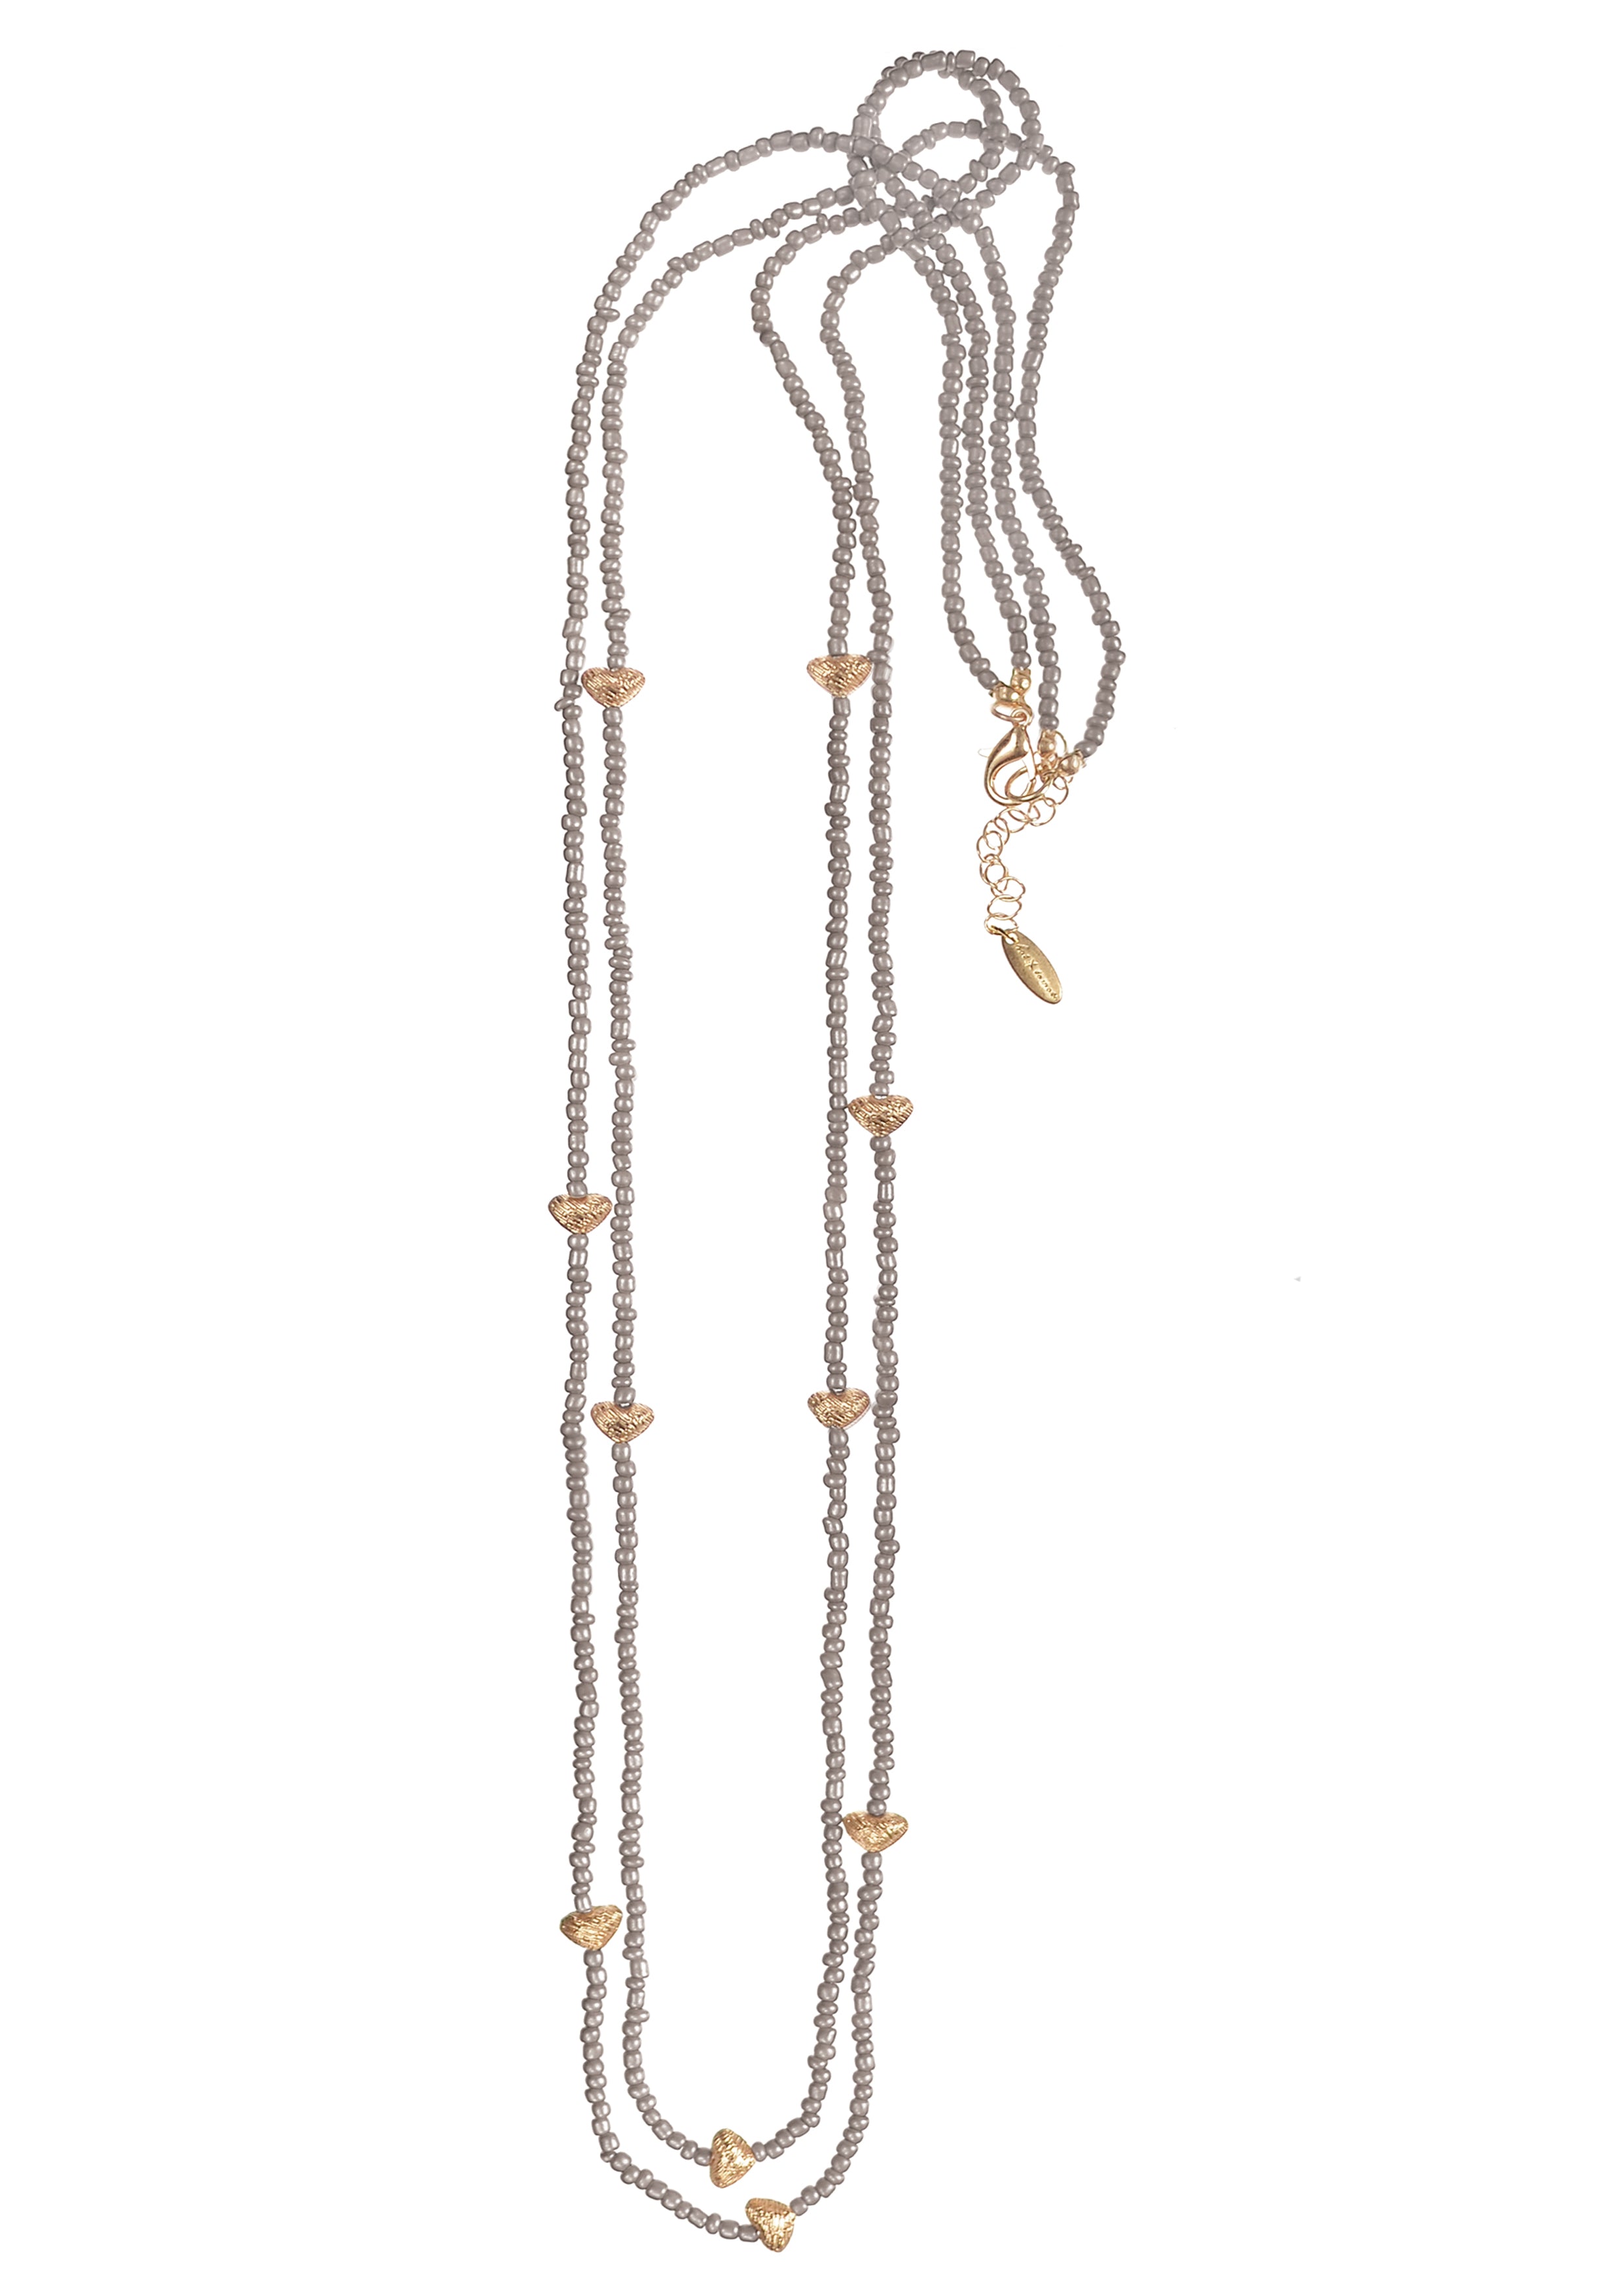 Double Heart Necklace - The Nancy Smillie Shop - Art, Jewellery & Designer Gifts Glasgow